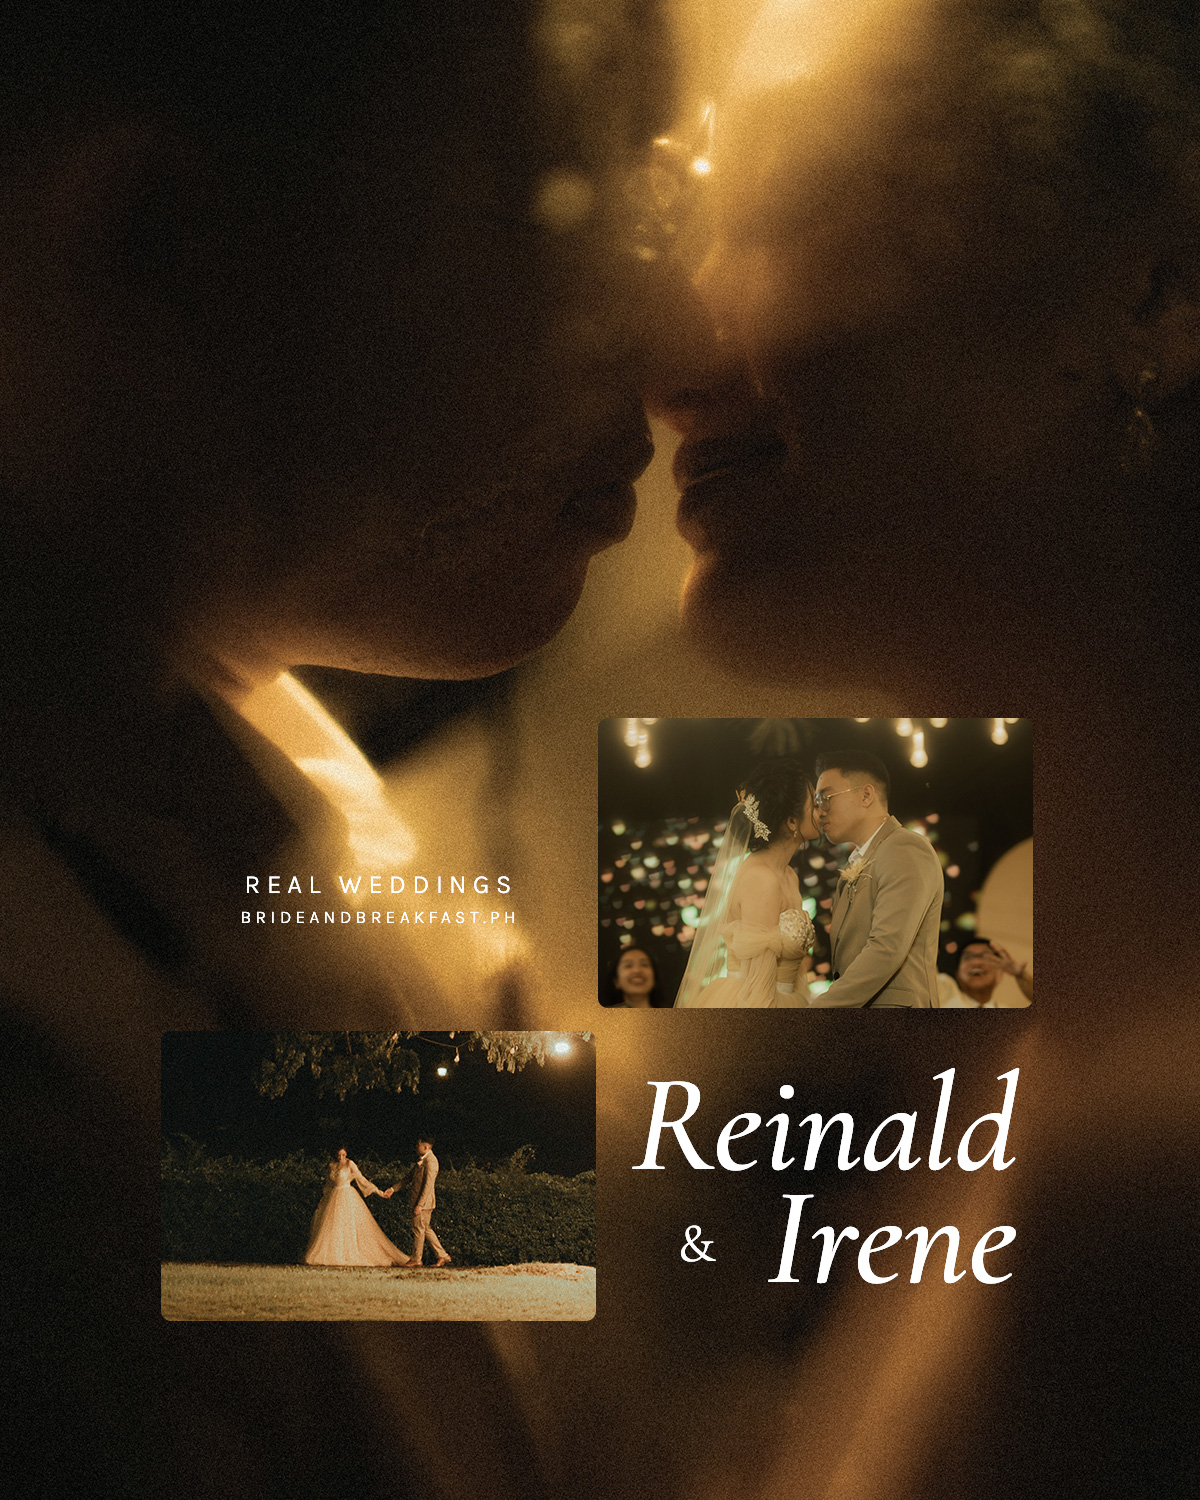 Reinald and Irene